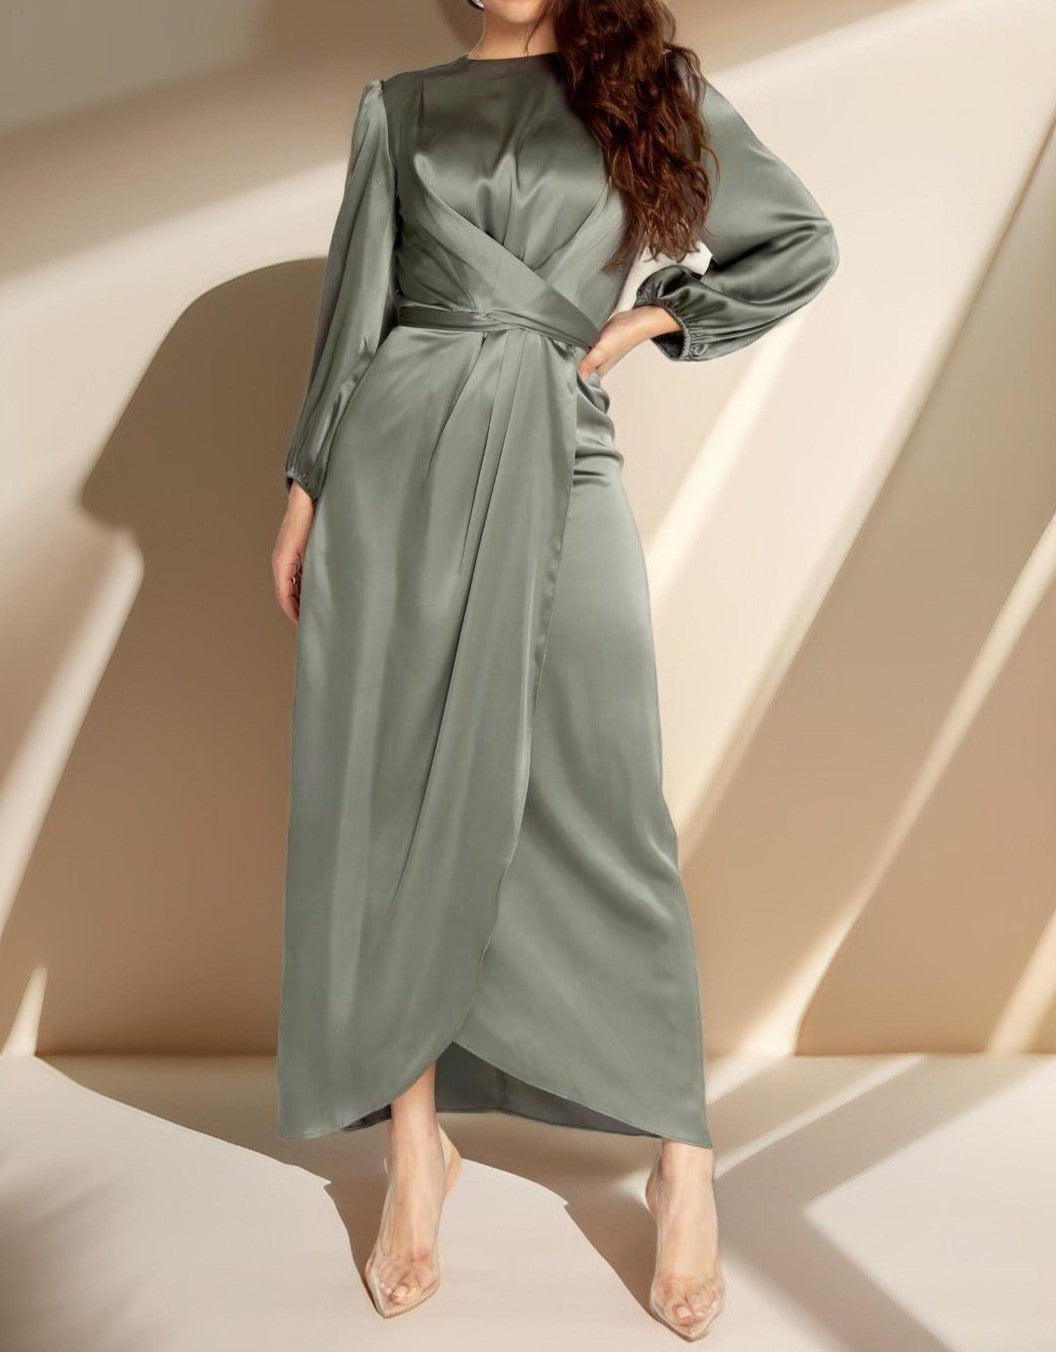 Feminine and elegant tunic dress - Try Modest Limited 